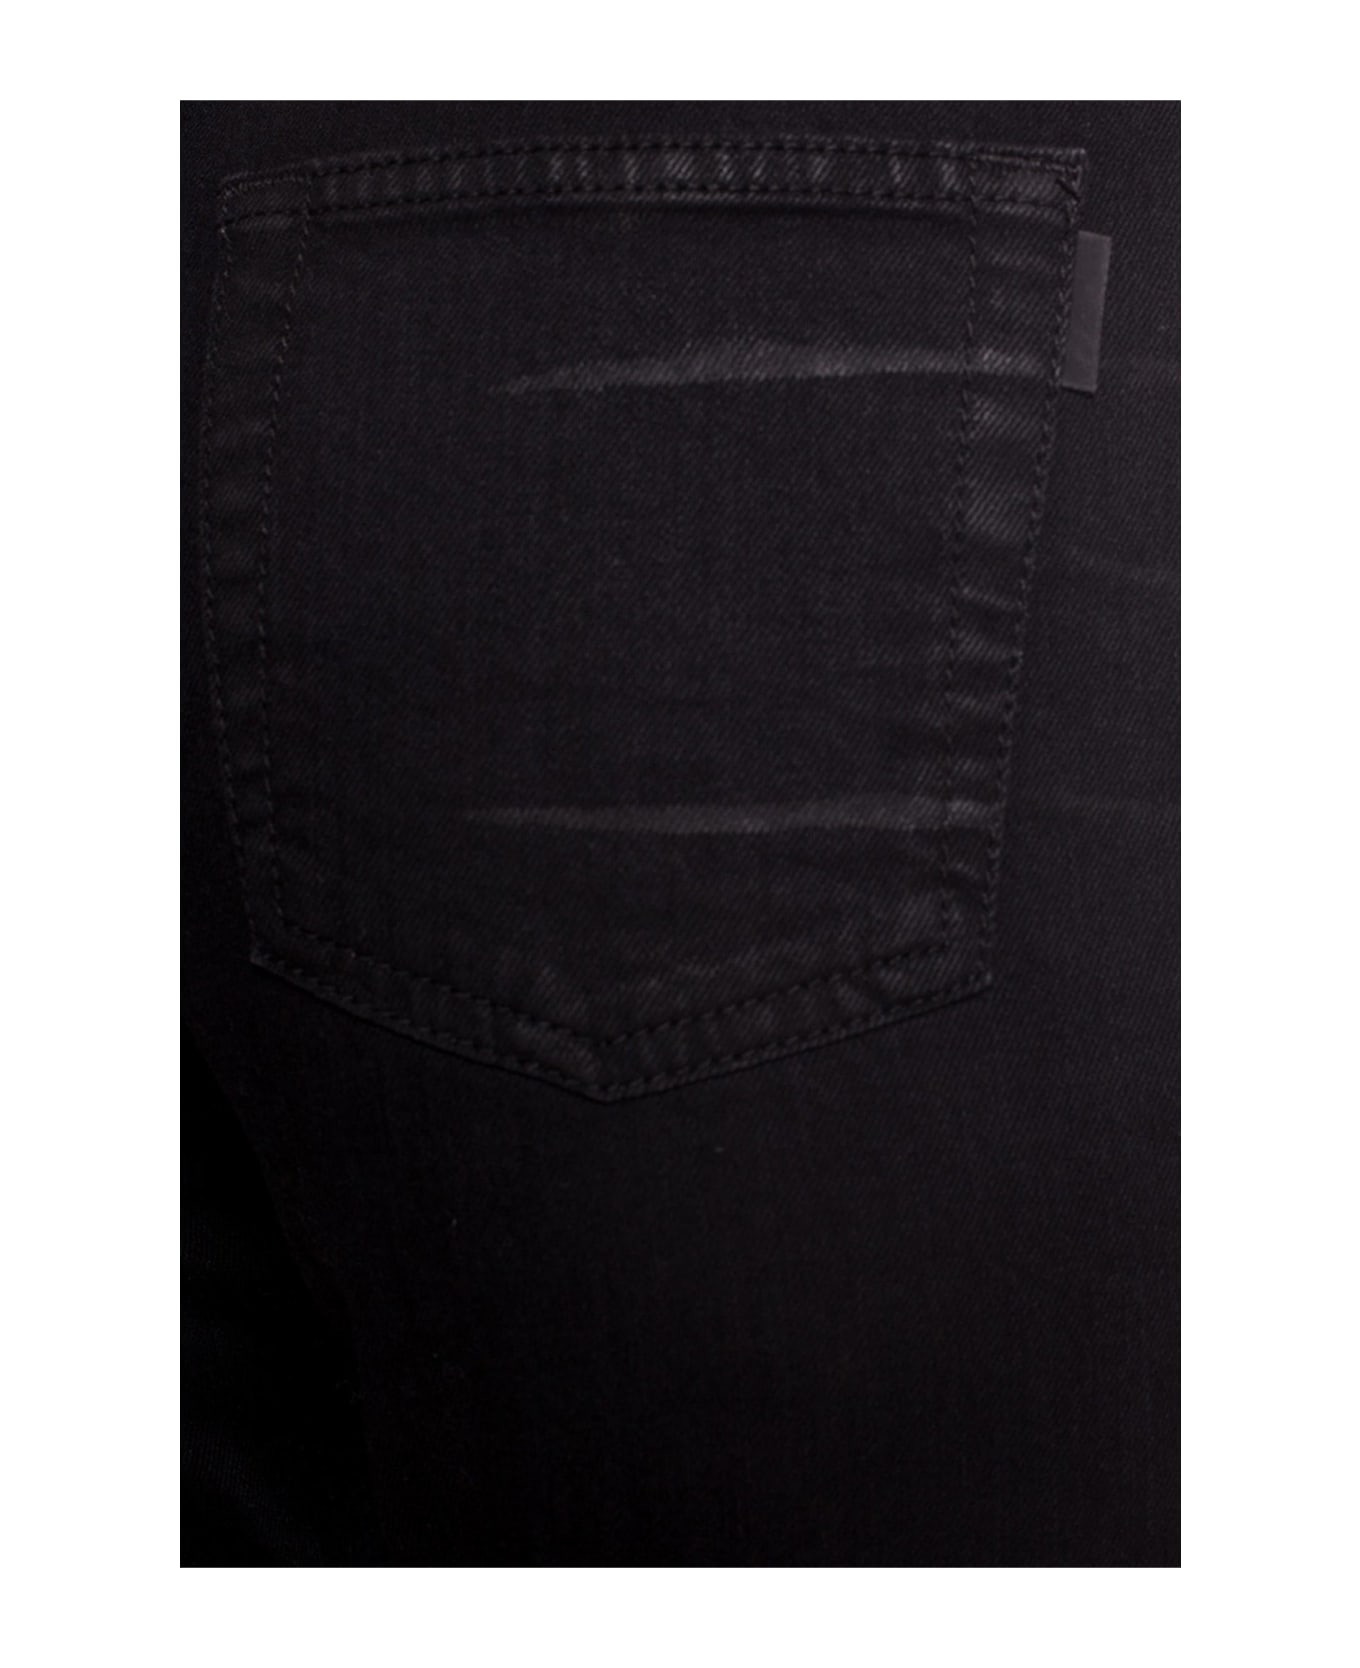 Saint Laurent Distressed Denim Jeans - Black